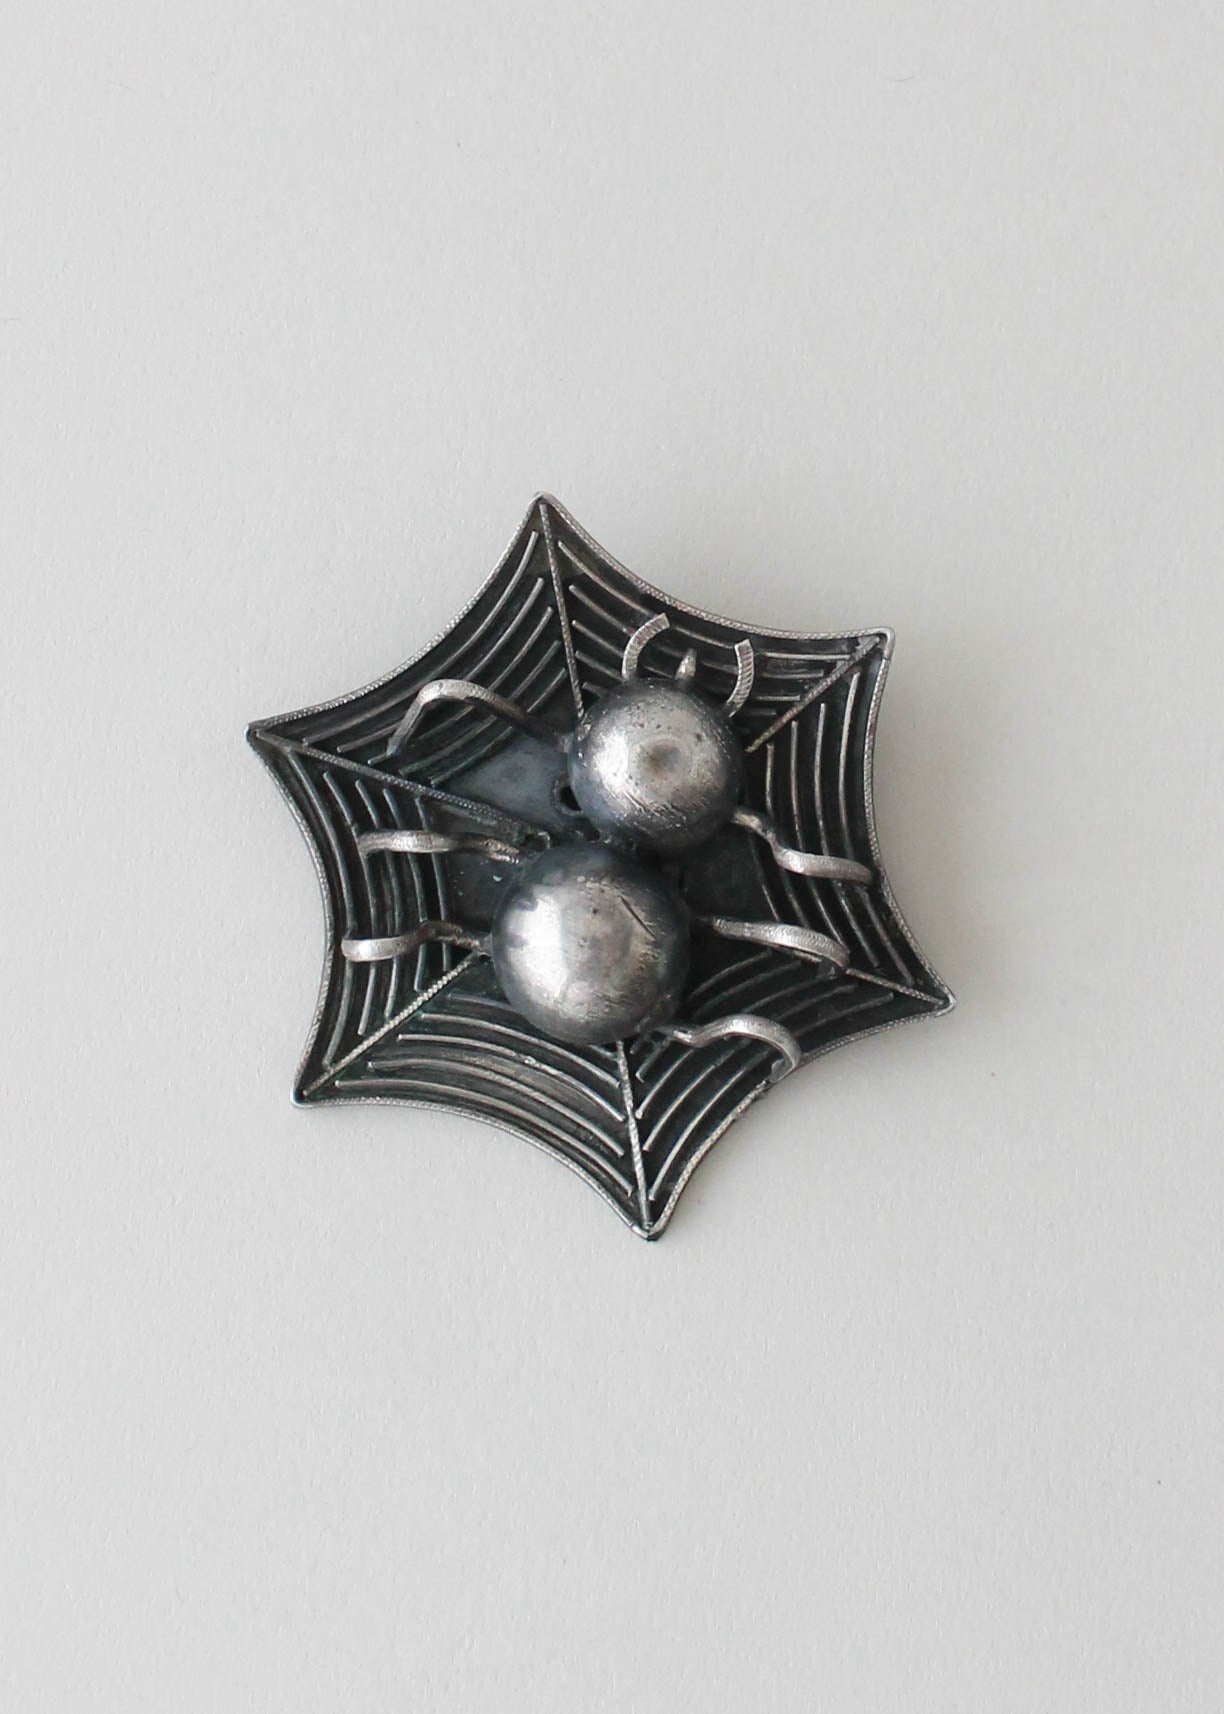 Vintage spider brooch silvertone and moonstone?